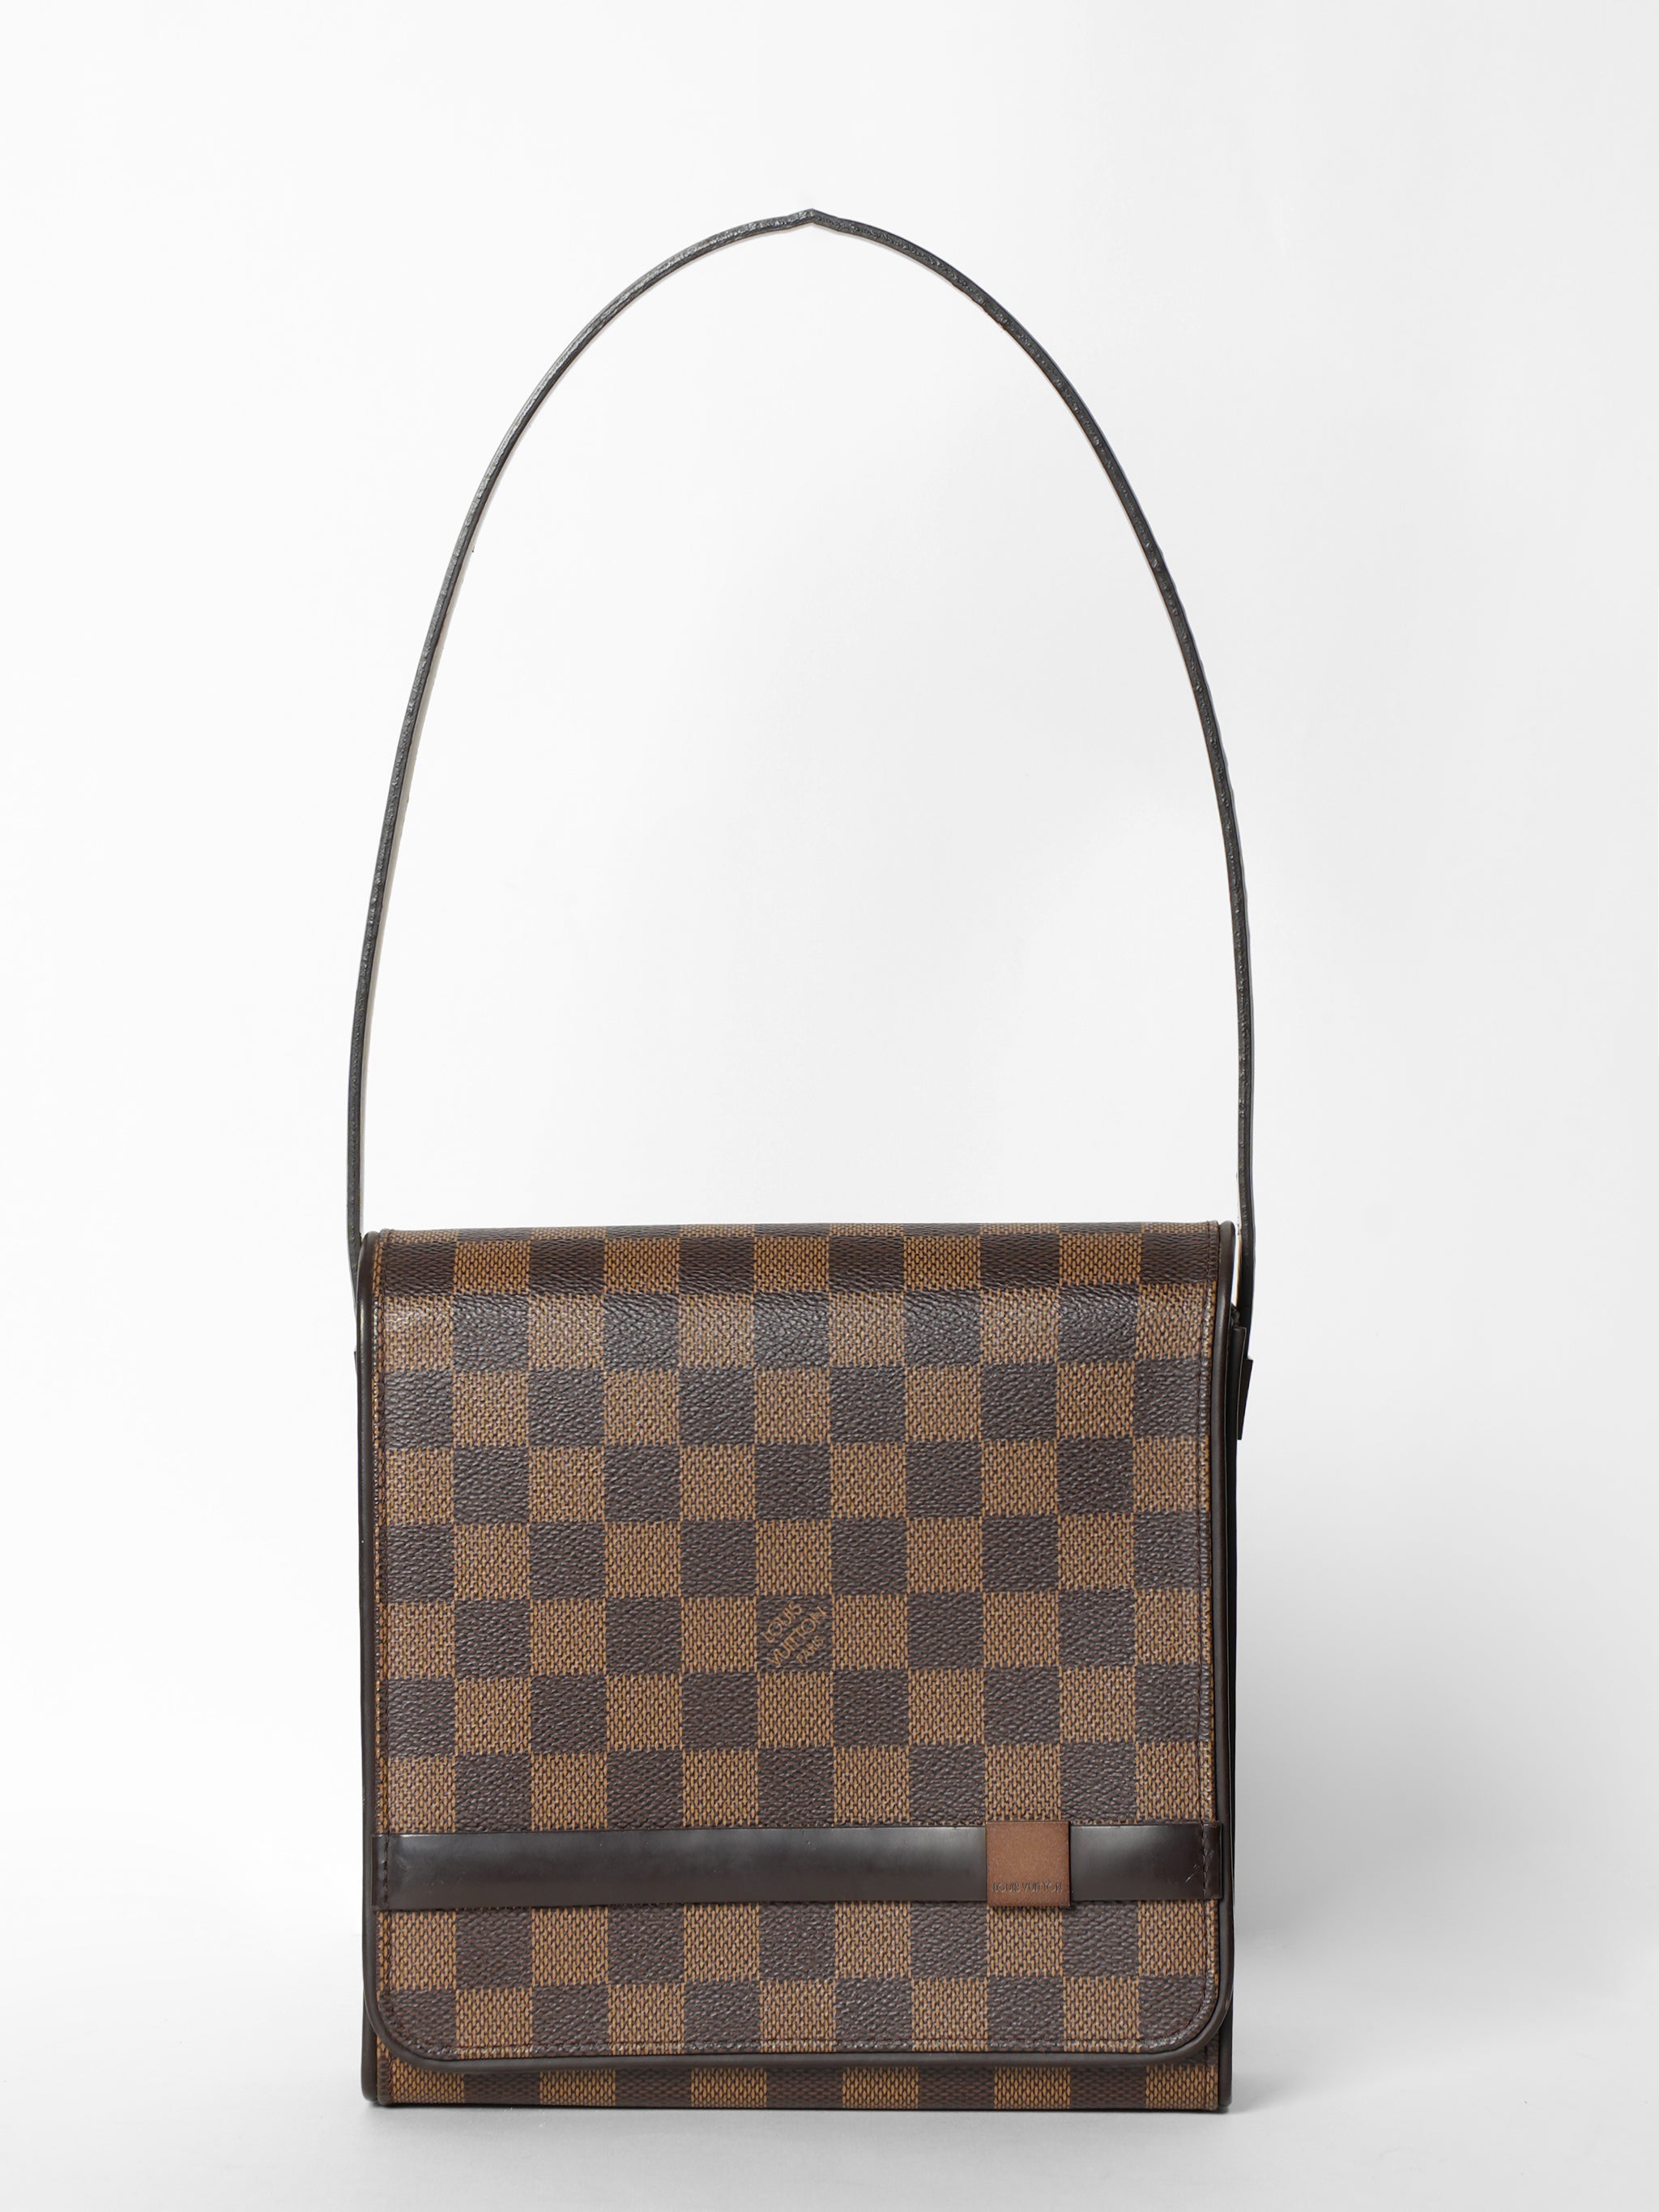 Louis Vuitton - Authenticated Boulogne Handbag - Cloth Beige for Women, Very Good Condition